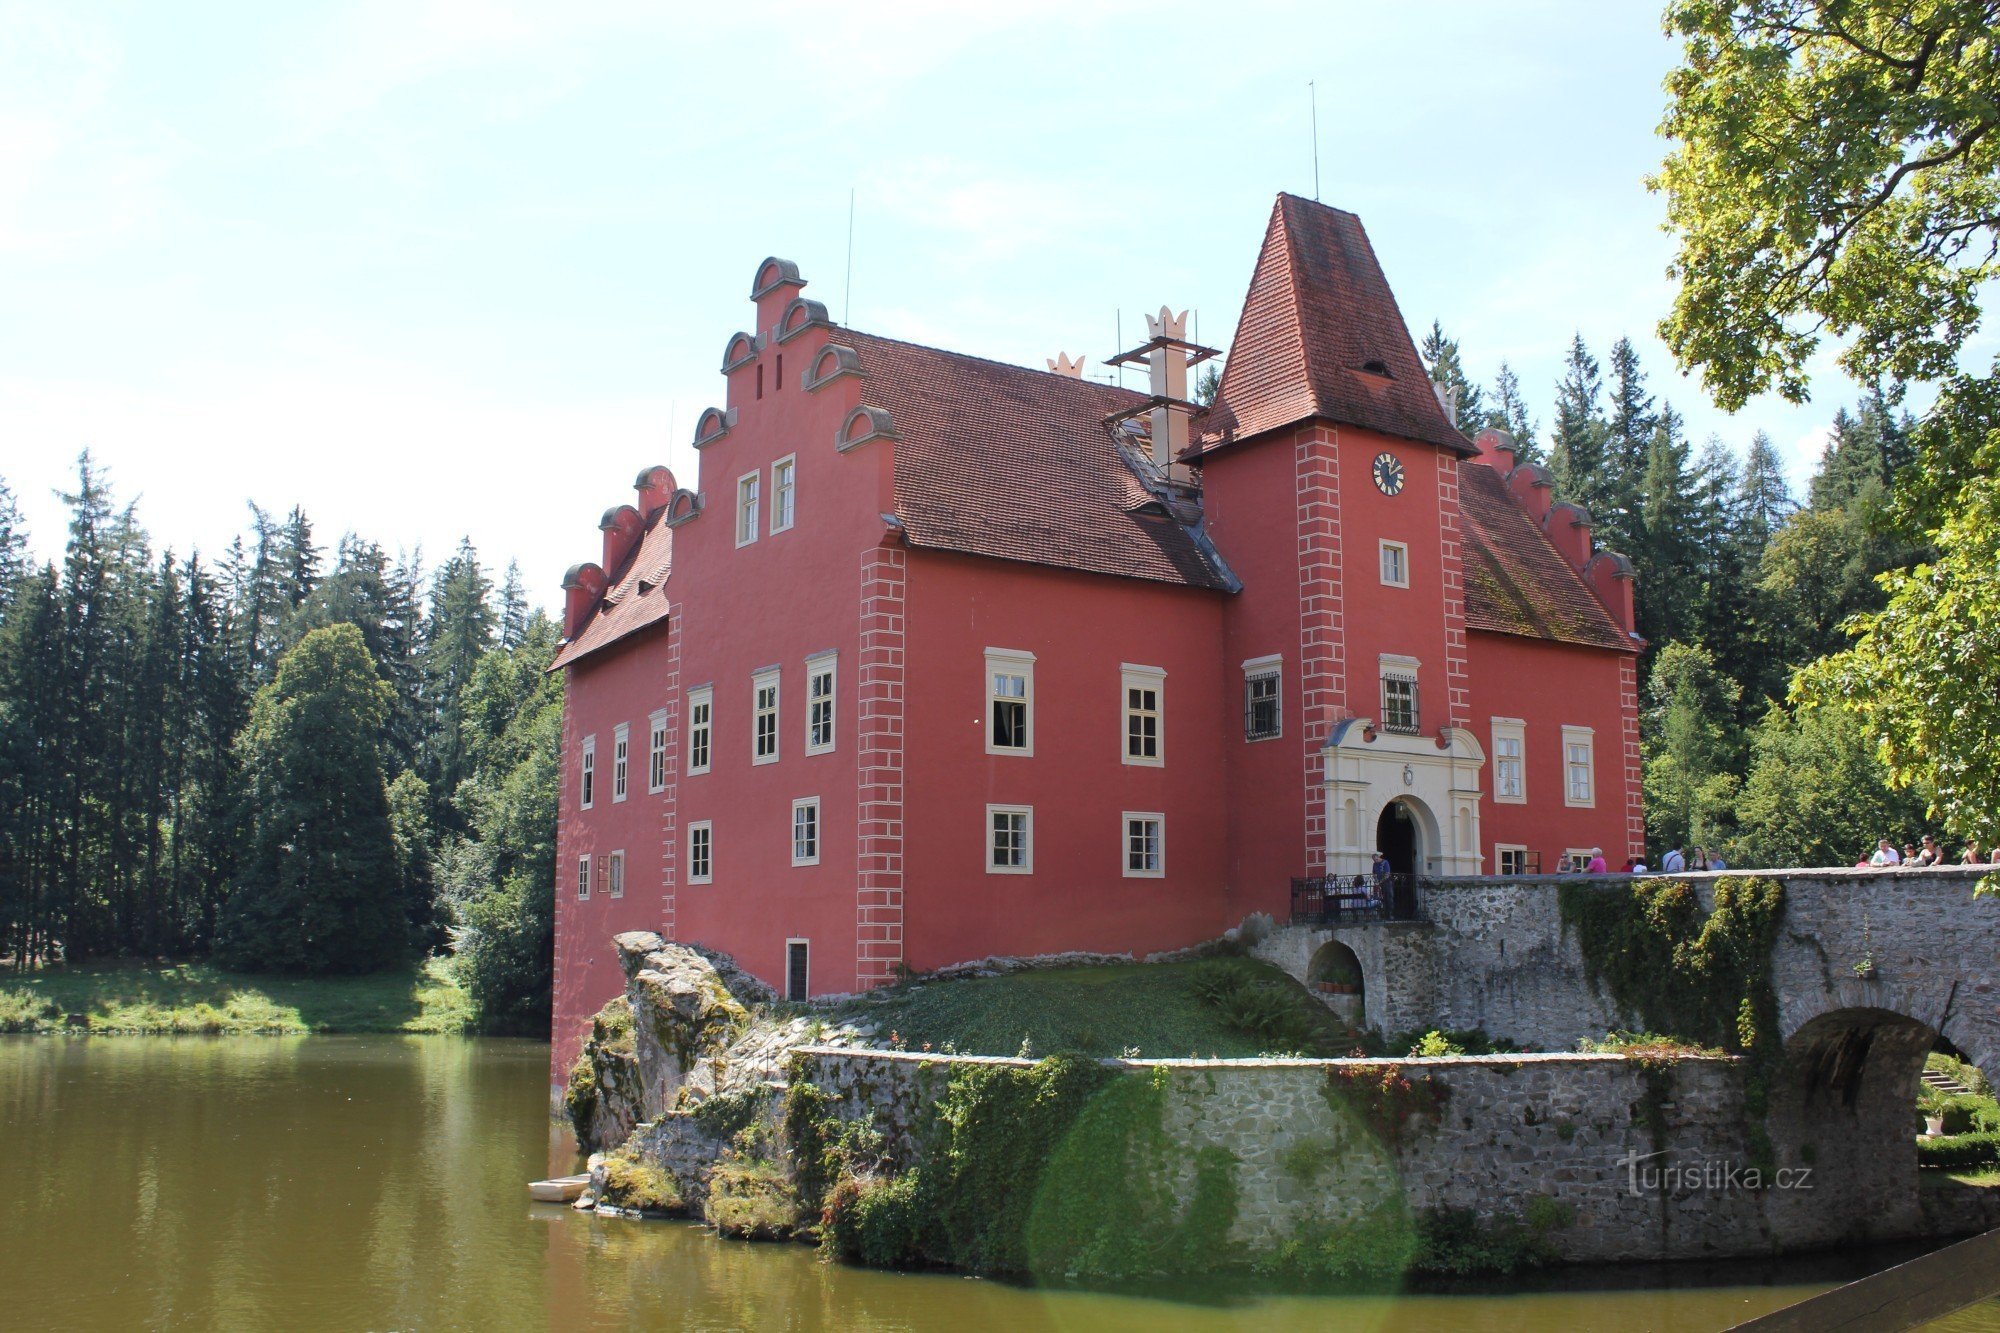 Lâu đài Červená Lhota và ao